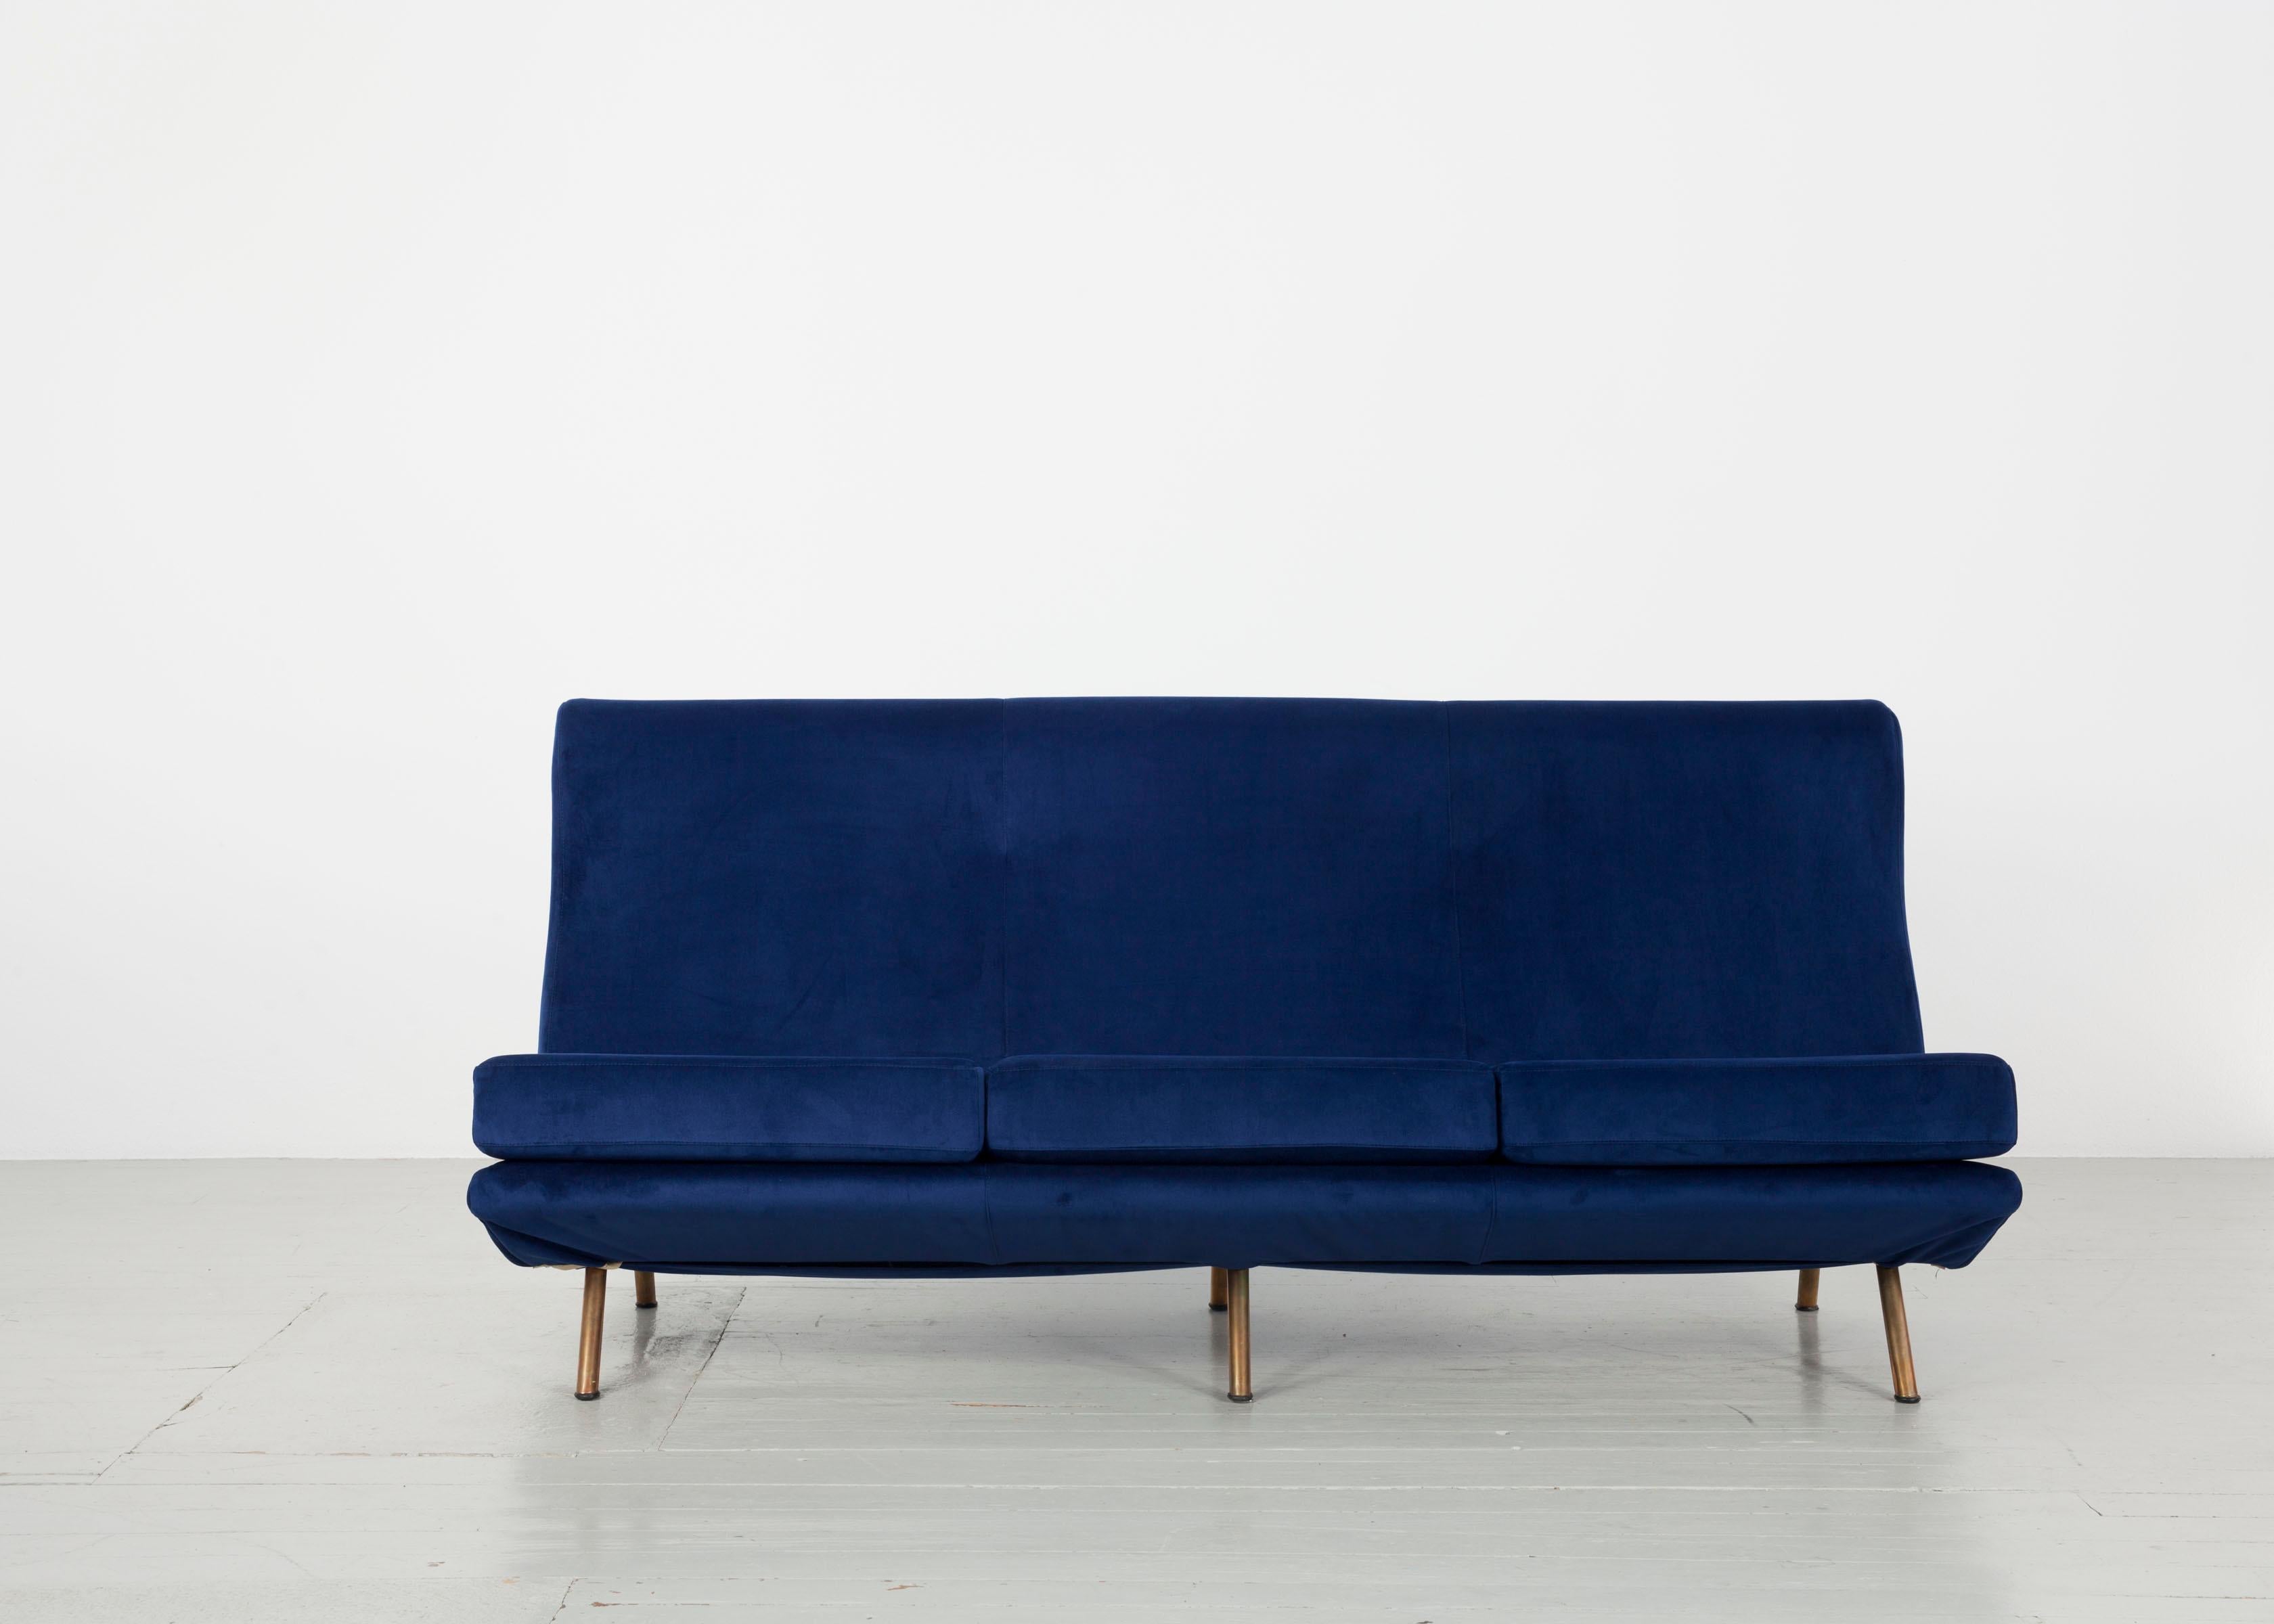 Velvet Deep Blue Three-Seat Sofa Model “Triennale”, Marco Zanuso, Arflex, 1956 For Sale 3